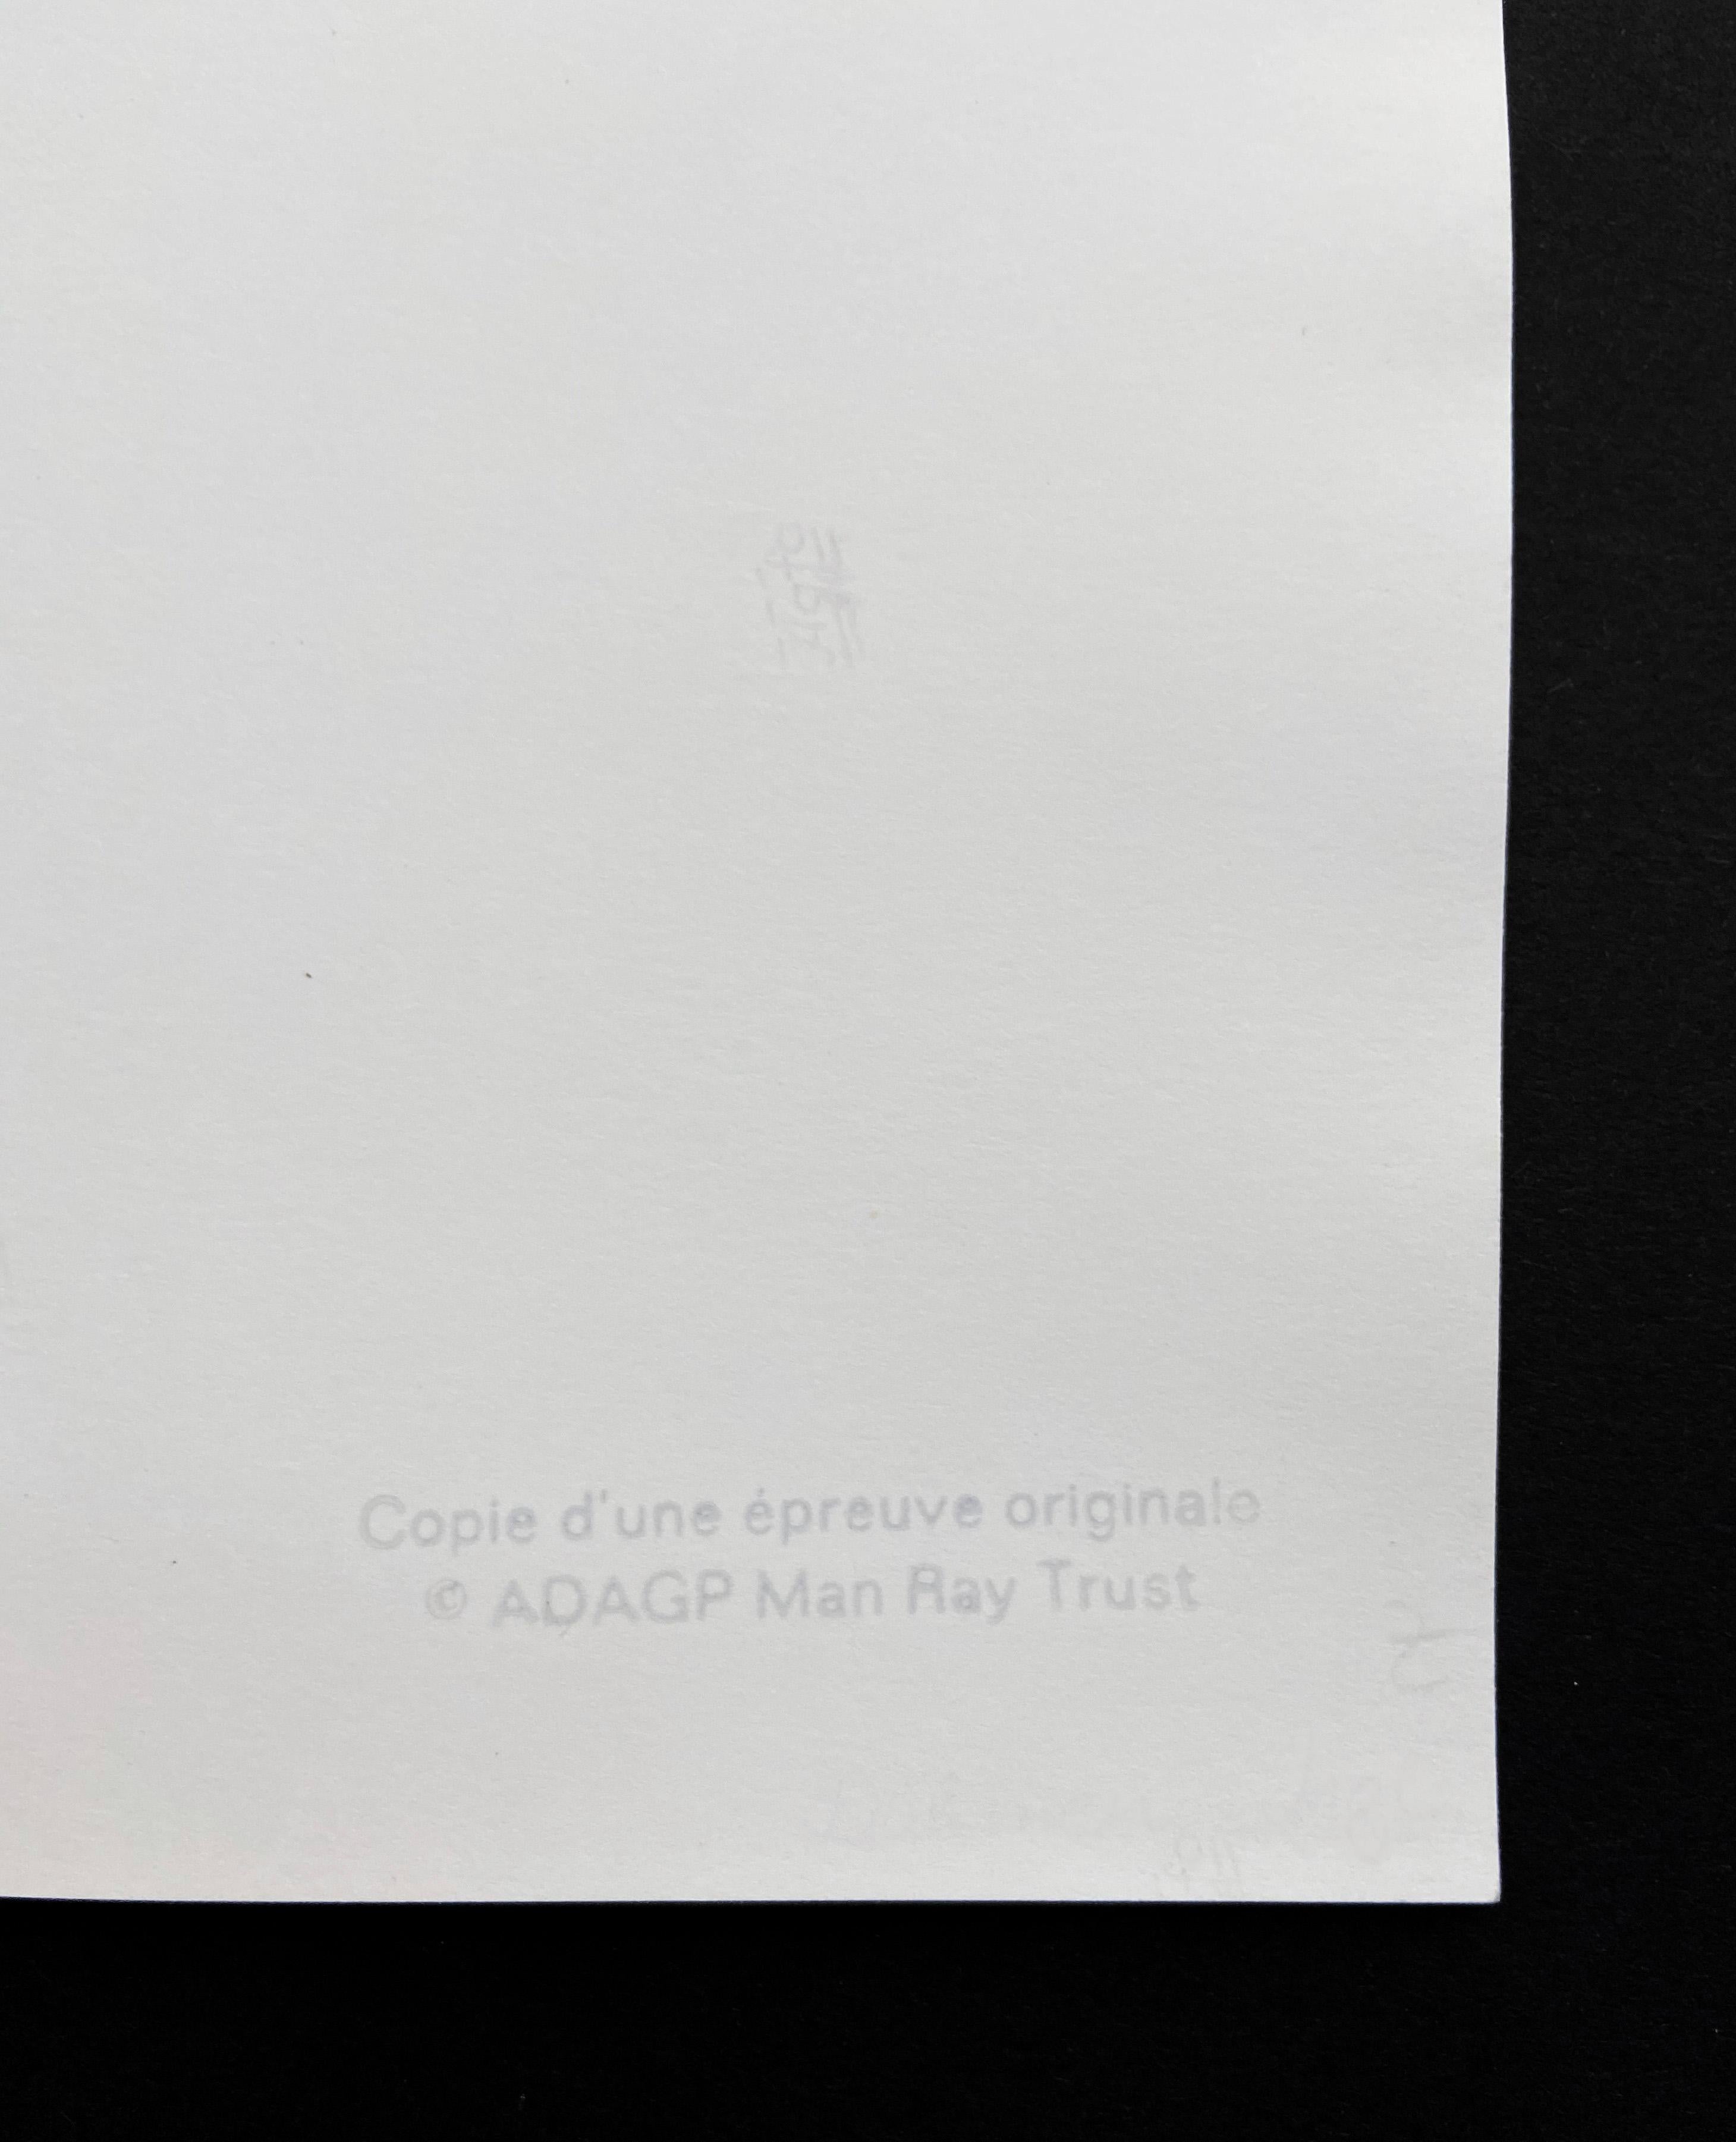 Man Ray (1890-1976) 
Échiquier Surréaliste (Surrealist Checkerboard), 1934/1991 
Medium: Silver Gelatin Print (later print) 
Dimensions: 30.5 x 23.7 cm 
Stamped: 